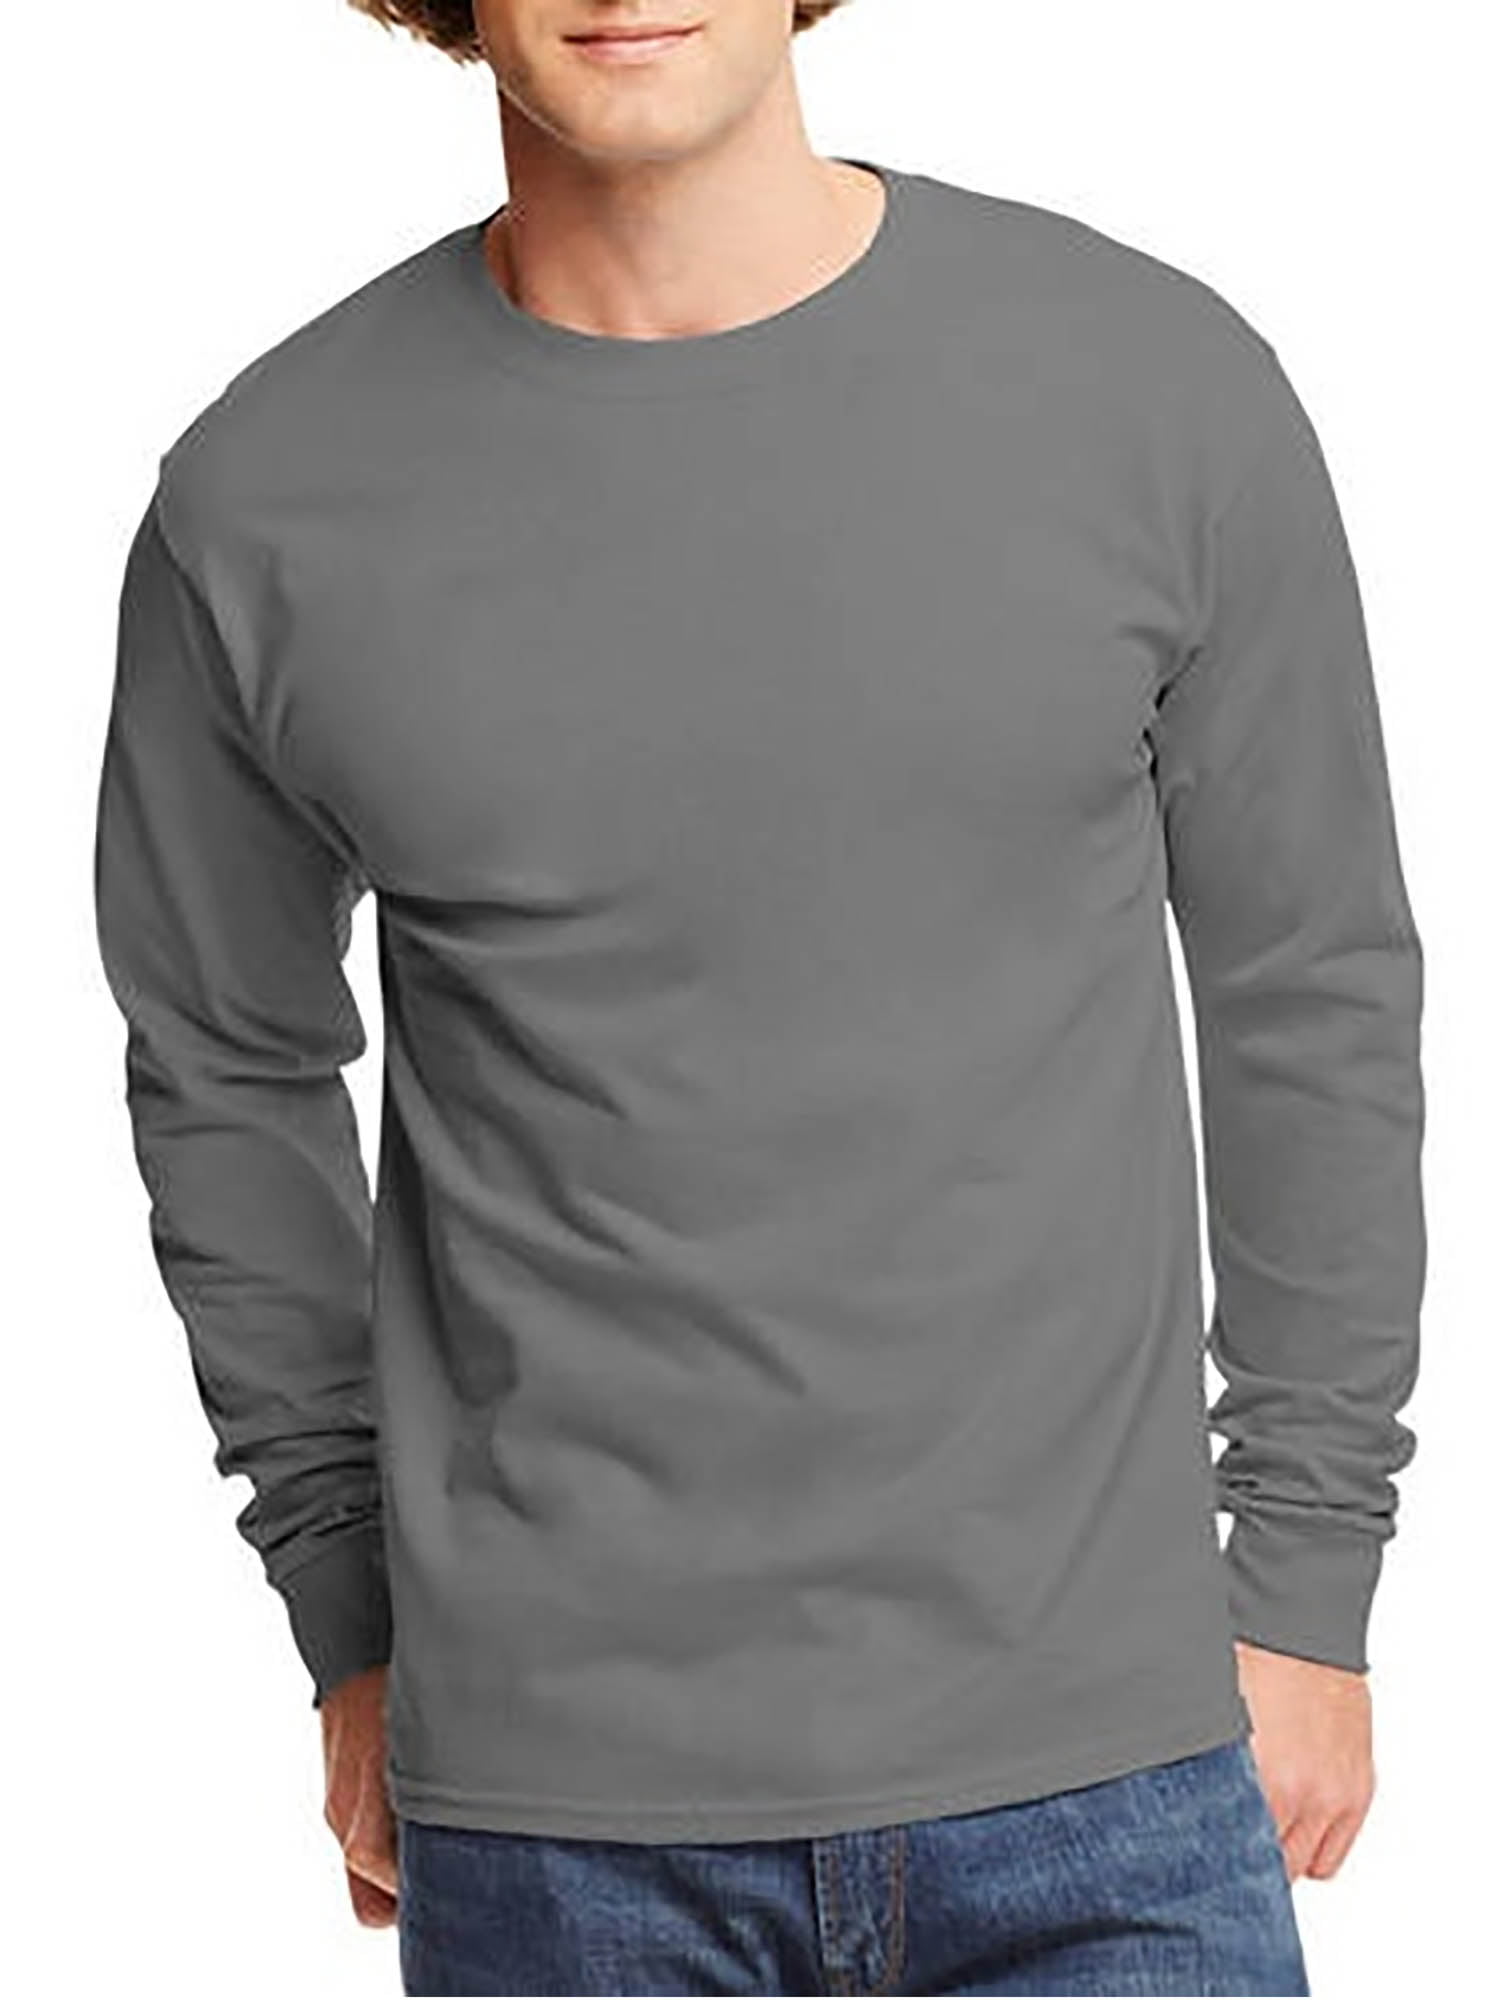 Hanes - Hanes Men's and Big Men's Tagless Long Sleeve T-Shirt, Up To ...